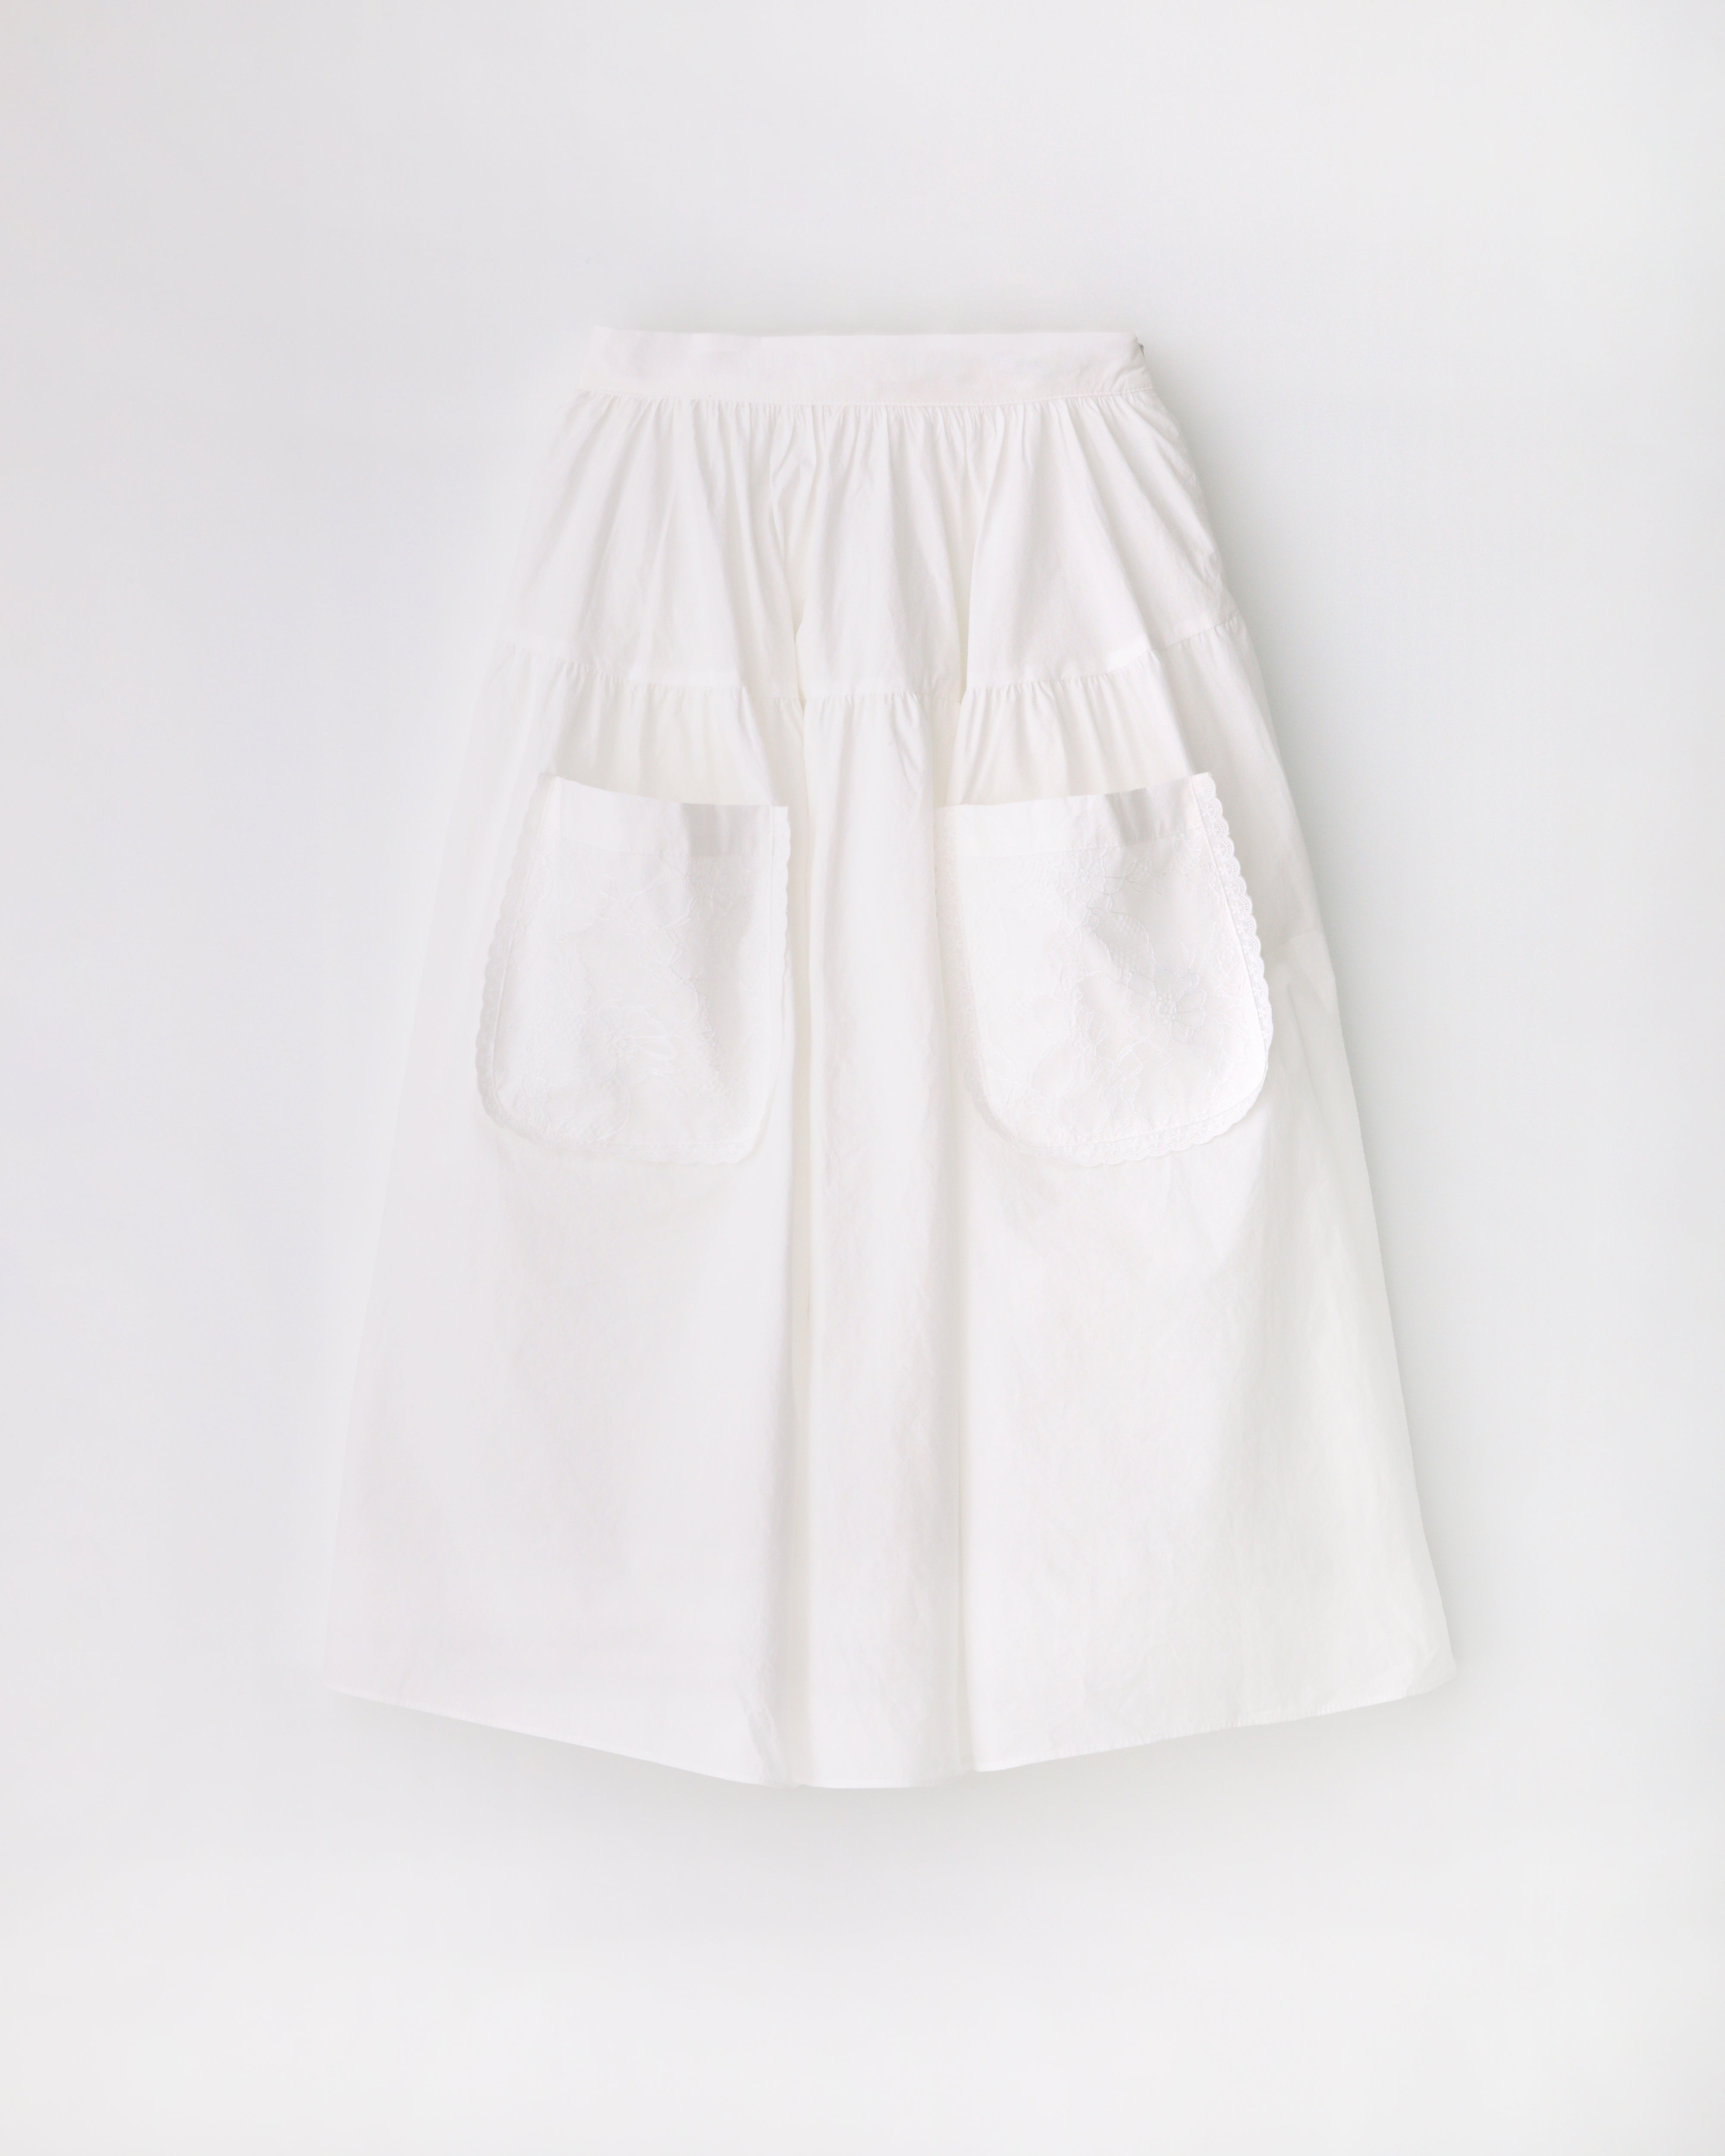 Apron lace skirt